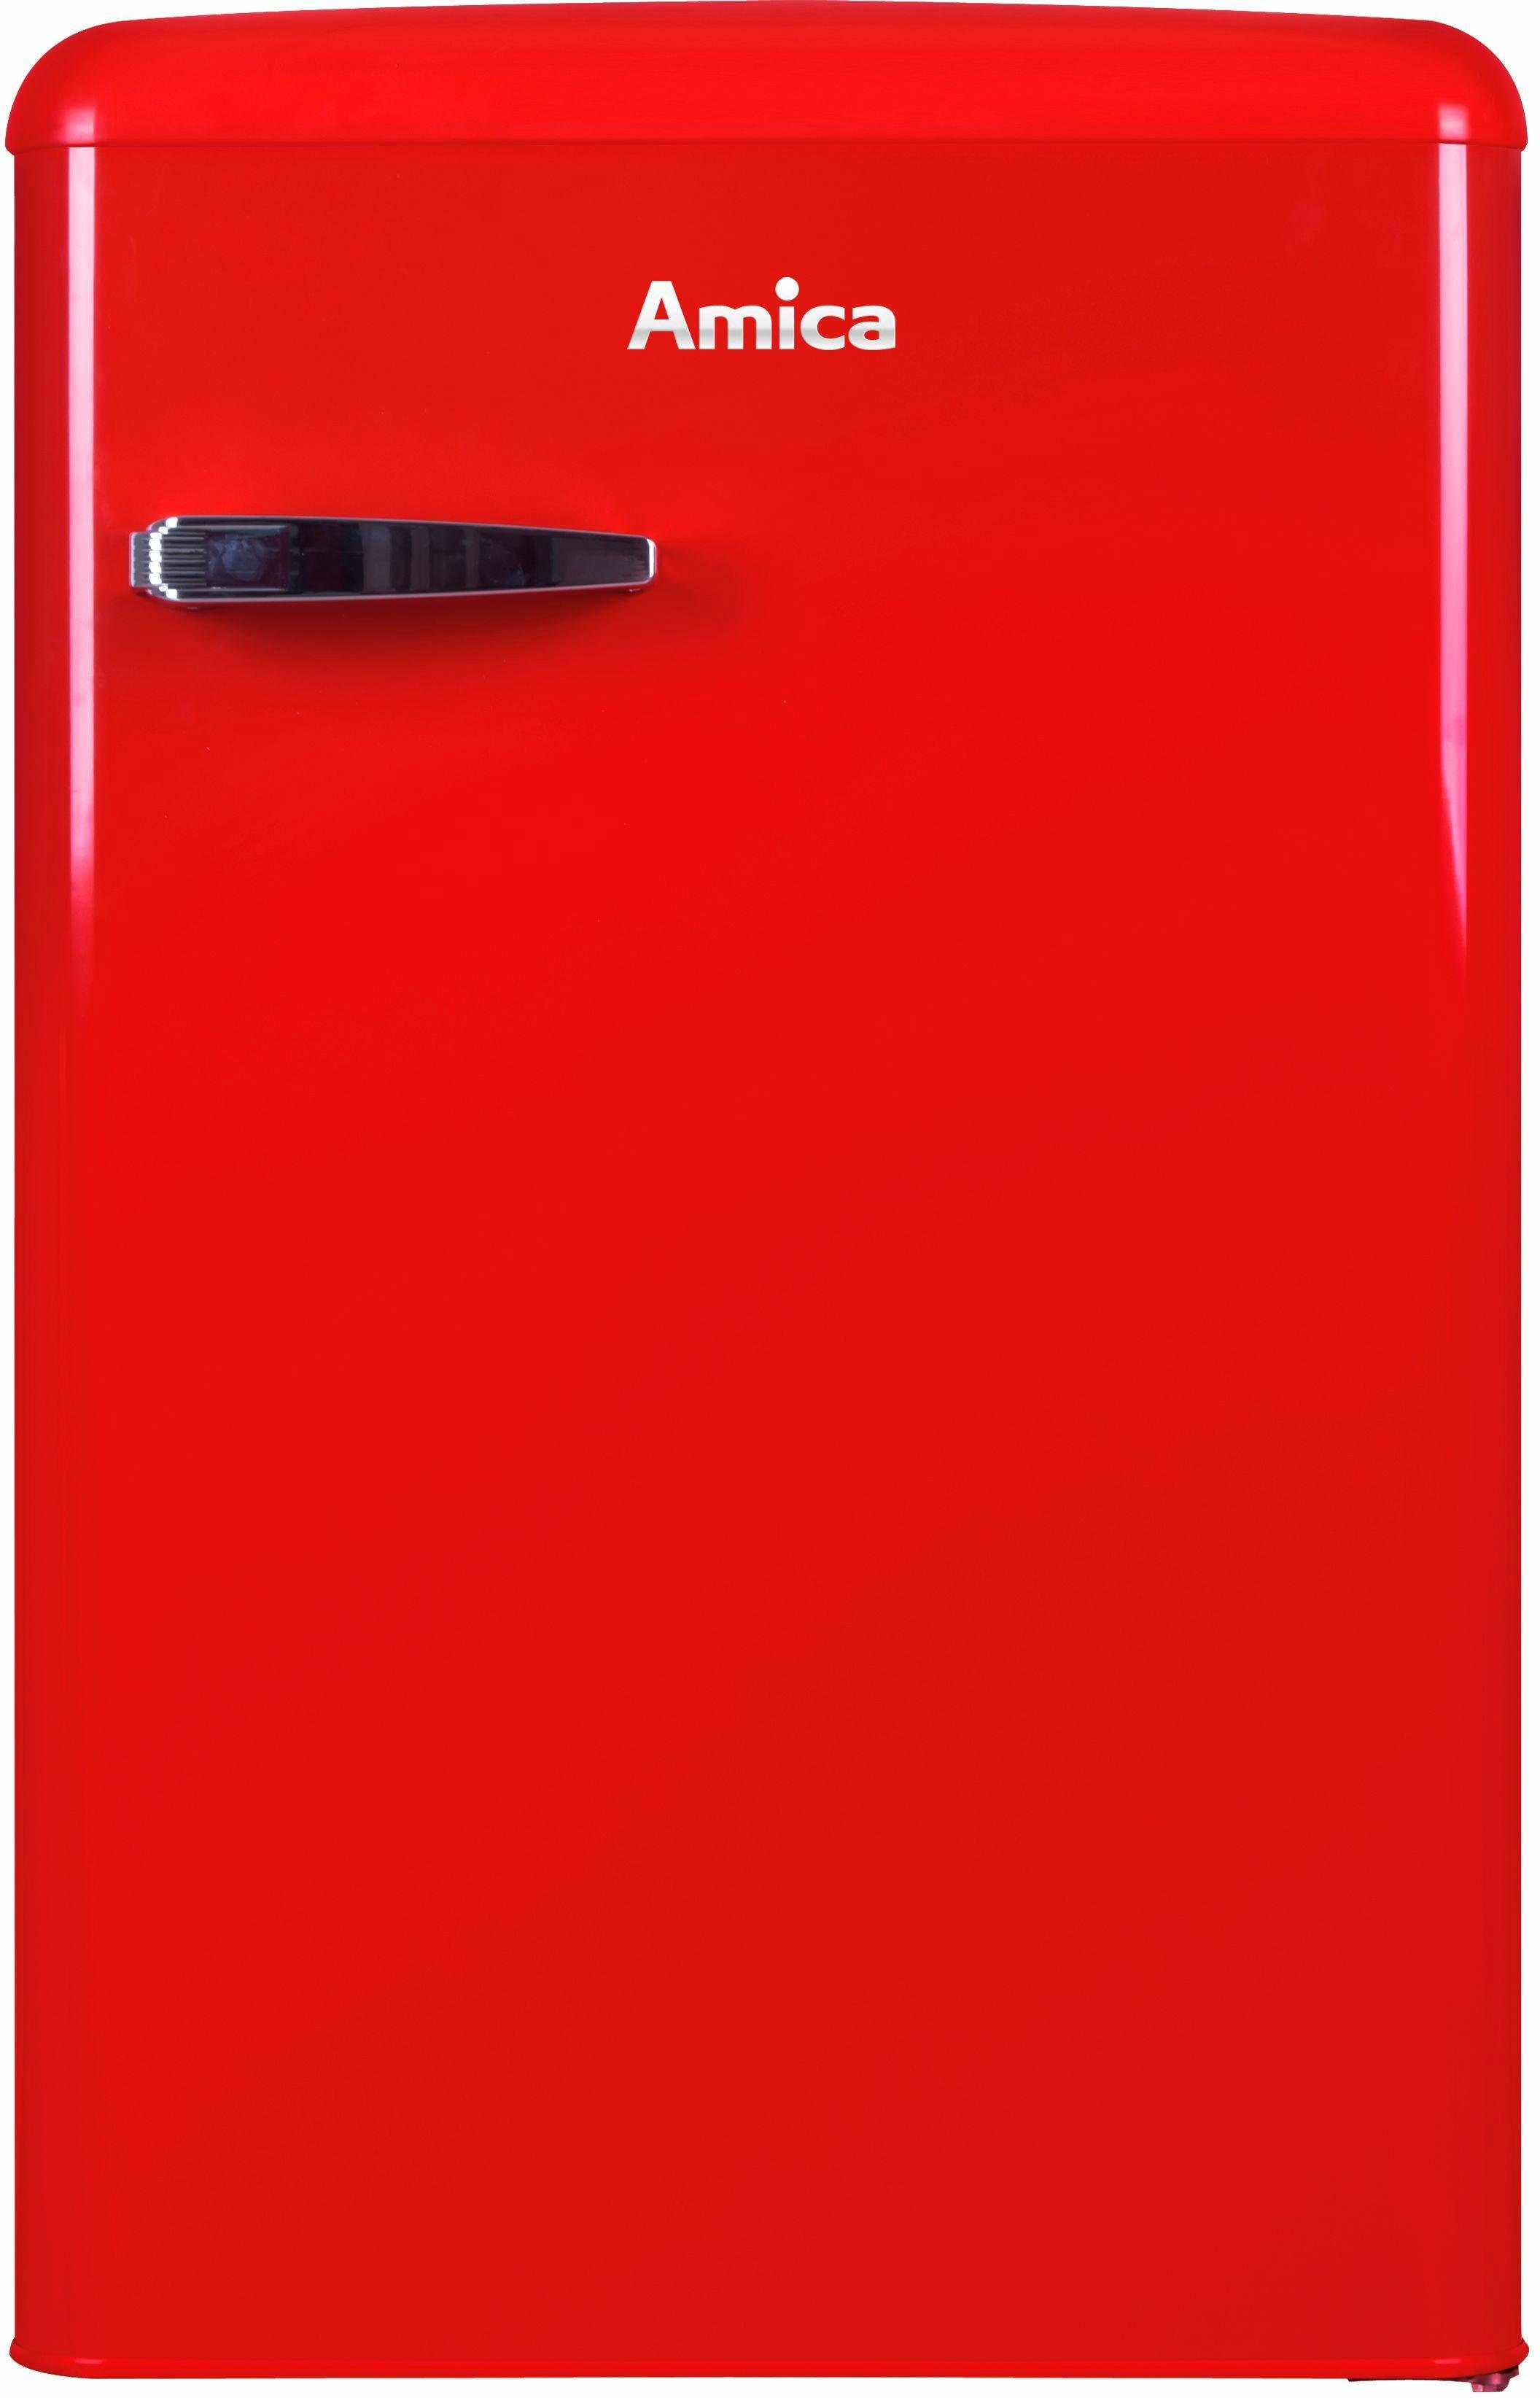 Top rot Amica cm 55 cm breit 87,5 hoch, Kühlschrank R, Table KS 15610